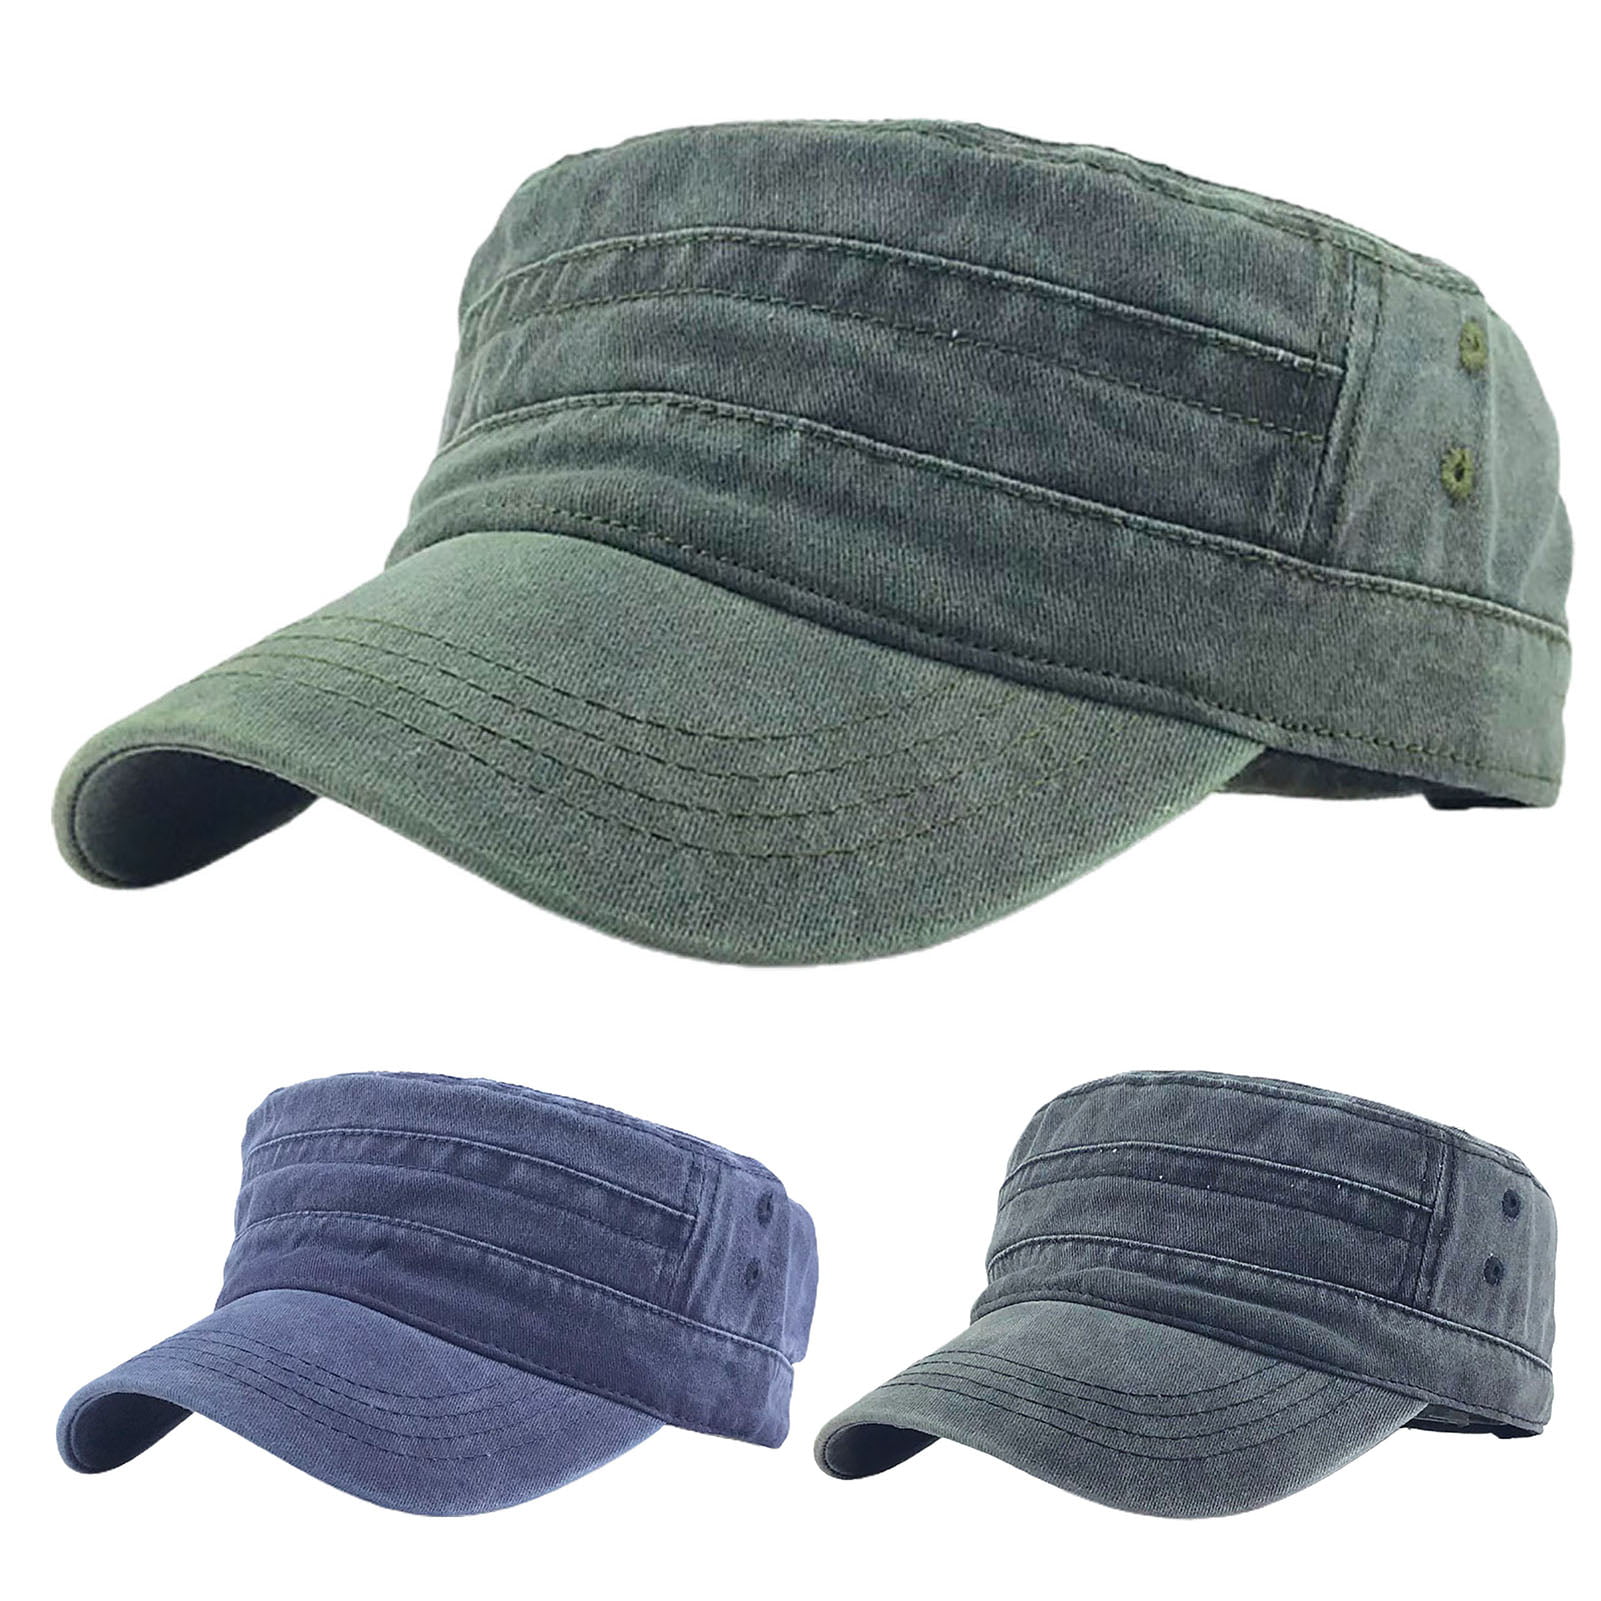  Uonlytech Boat Cap Men Hat Cap for Men Army Hats for